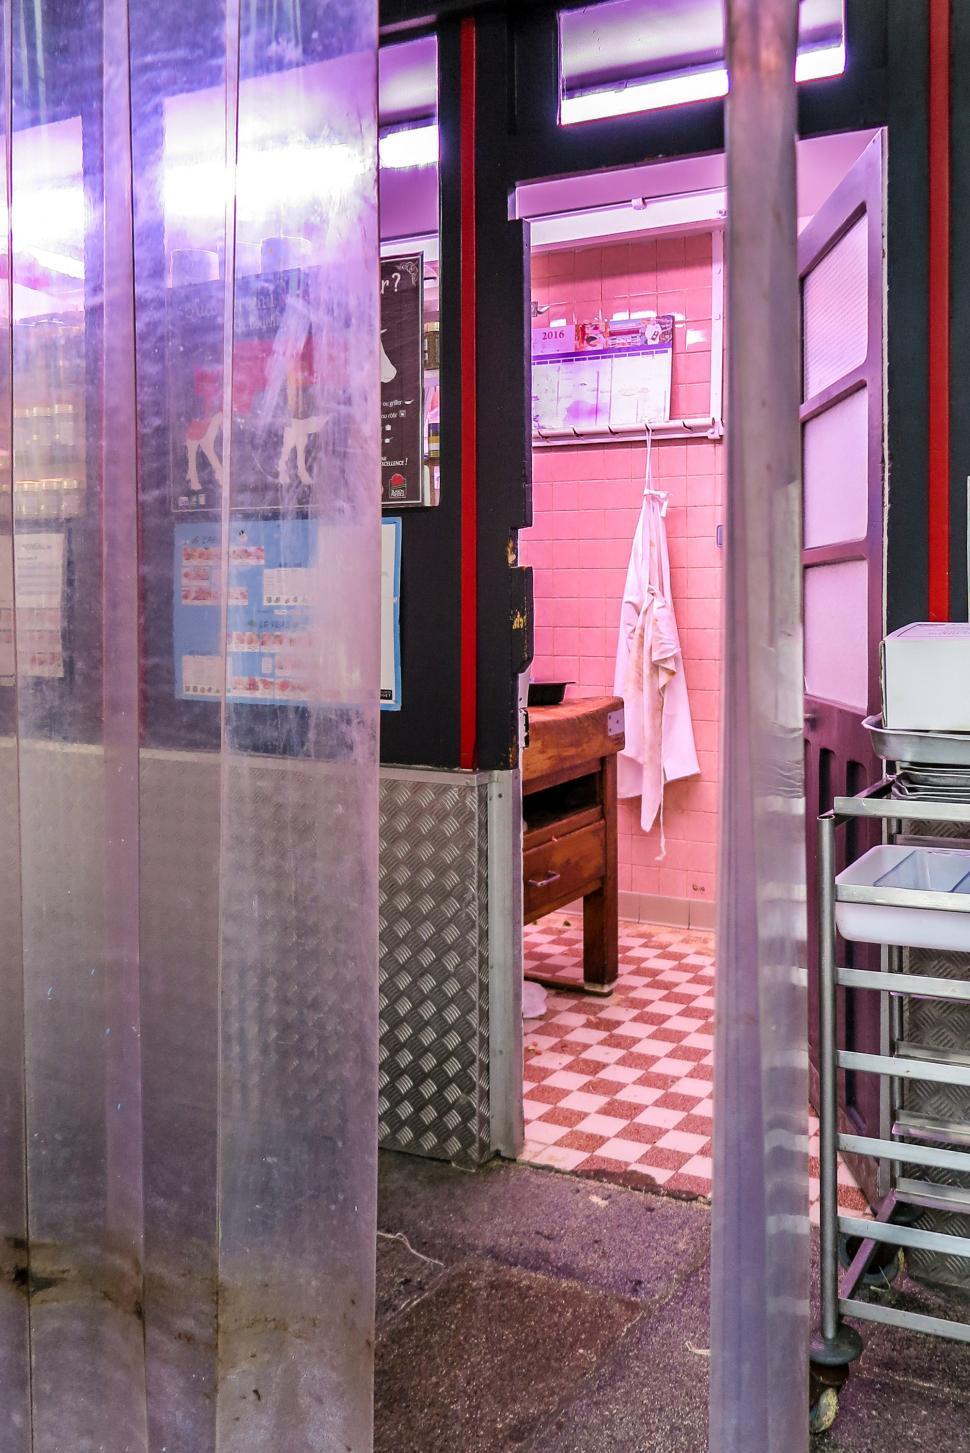 Get Free of Peek in a Paris butcher shop Online